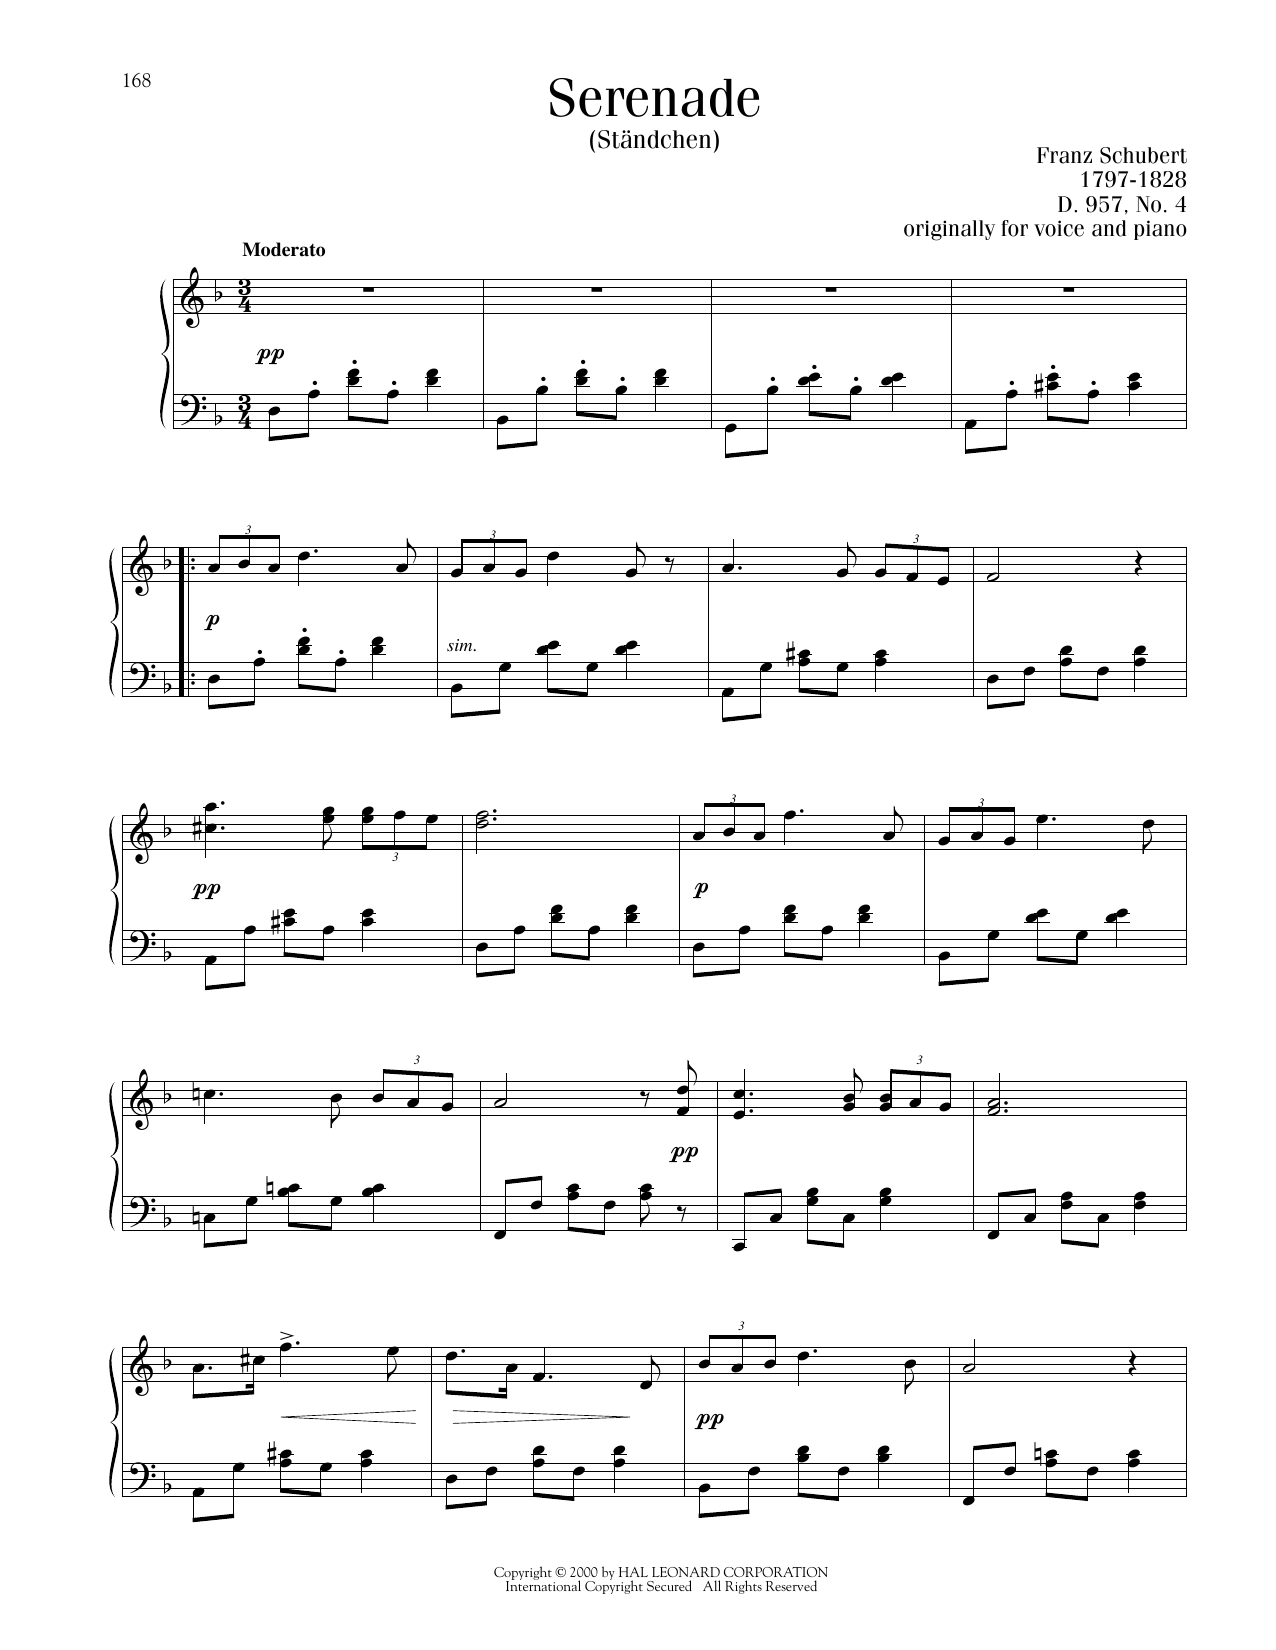 Franz Schubert Serenade (Ständchen) sheet music notes printable PDF score